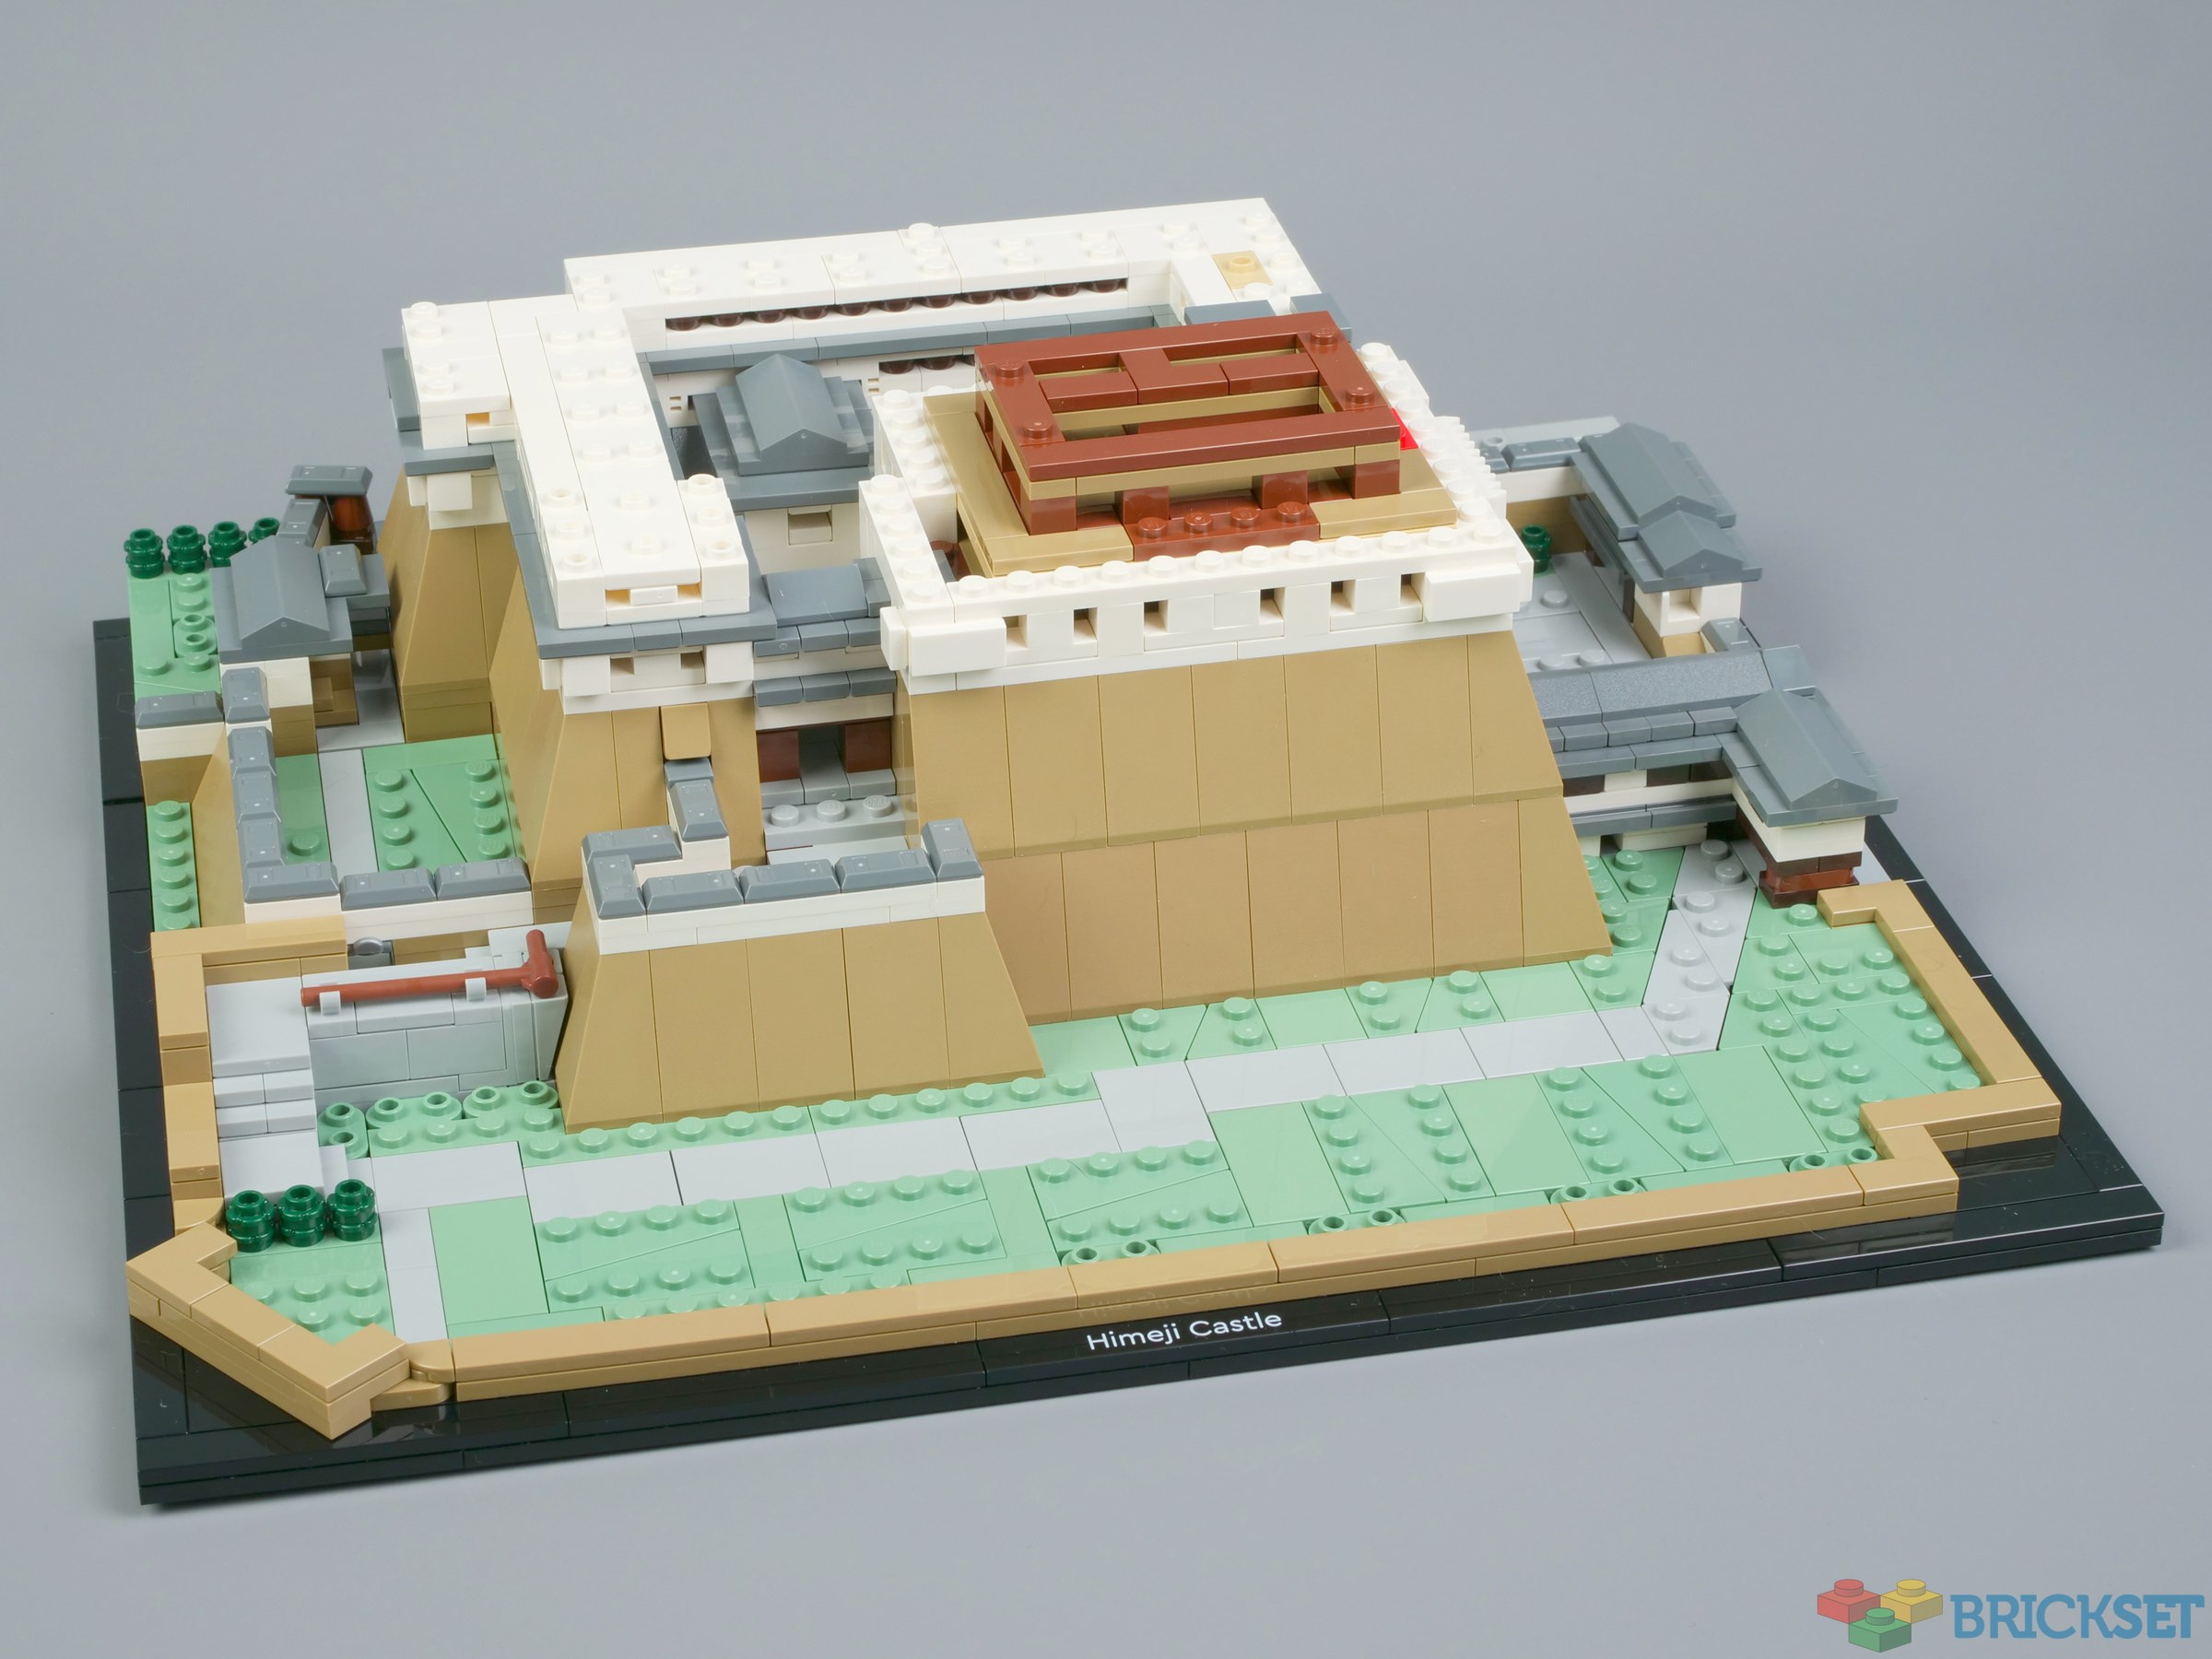 LEGO 21060 Himeji Castle review